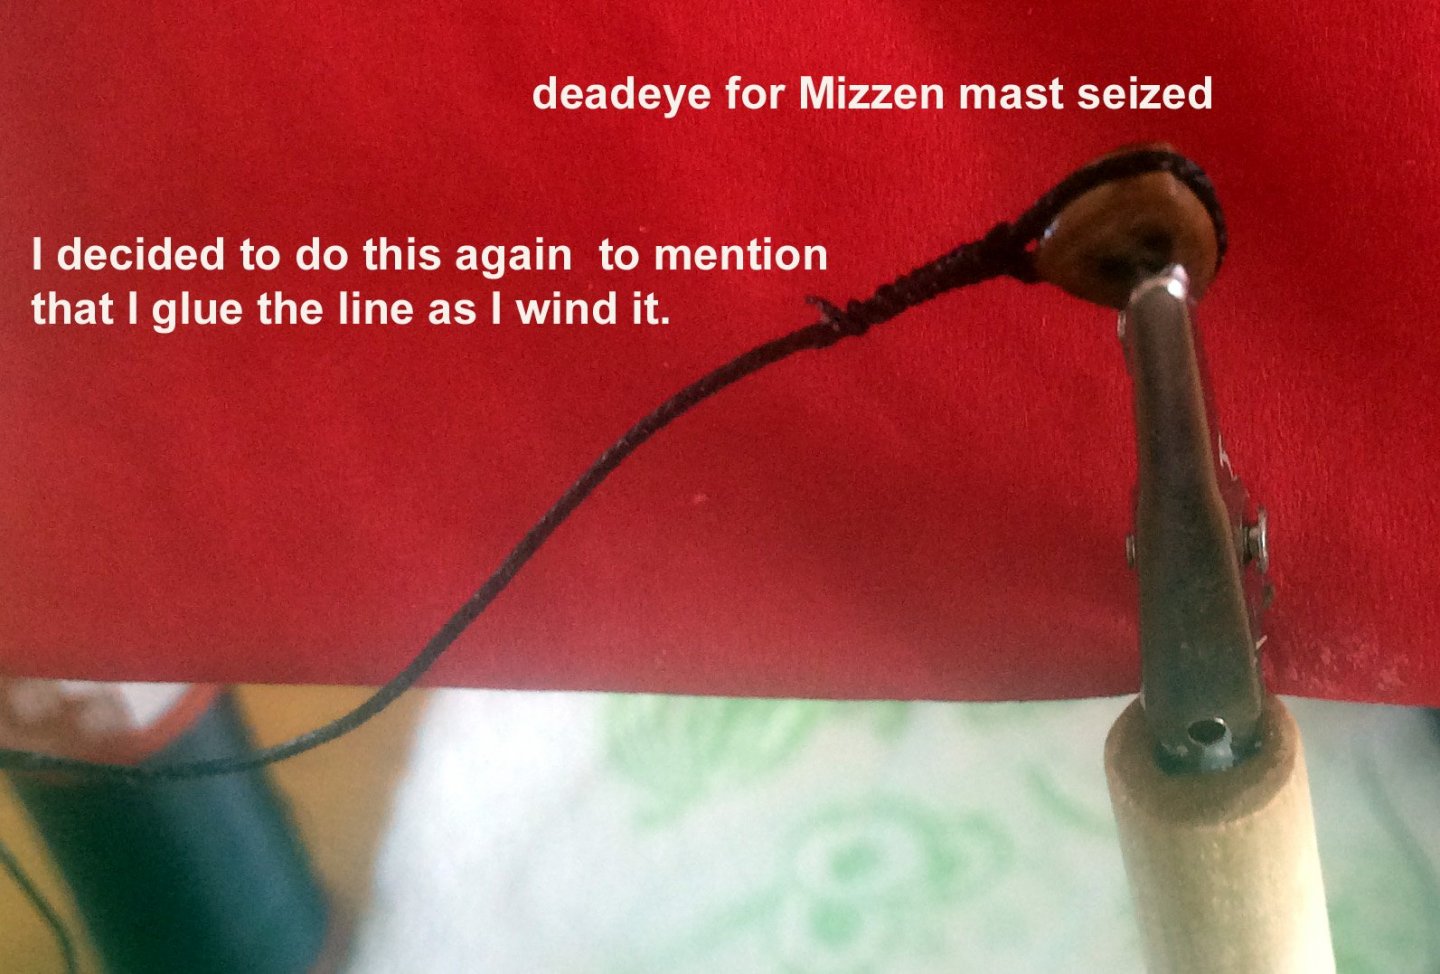 mizzen seized glued.jpg